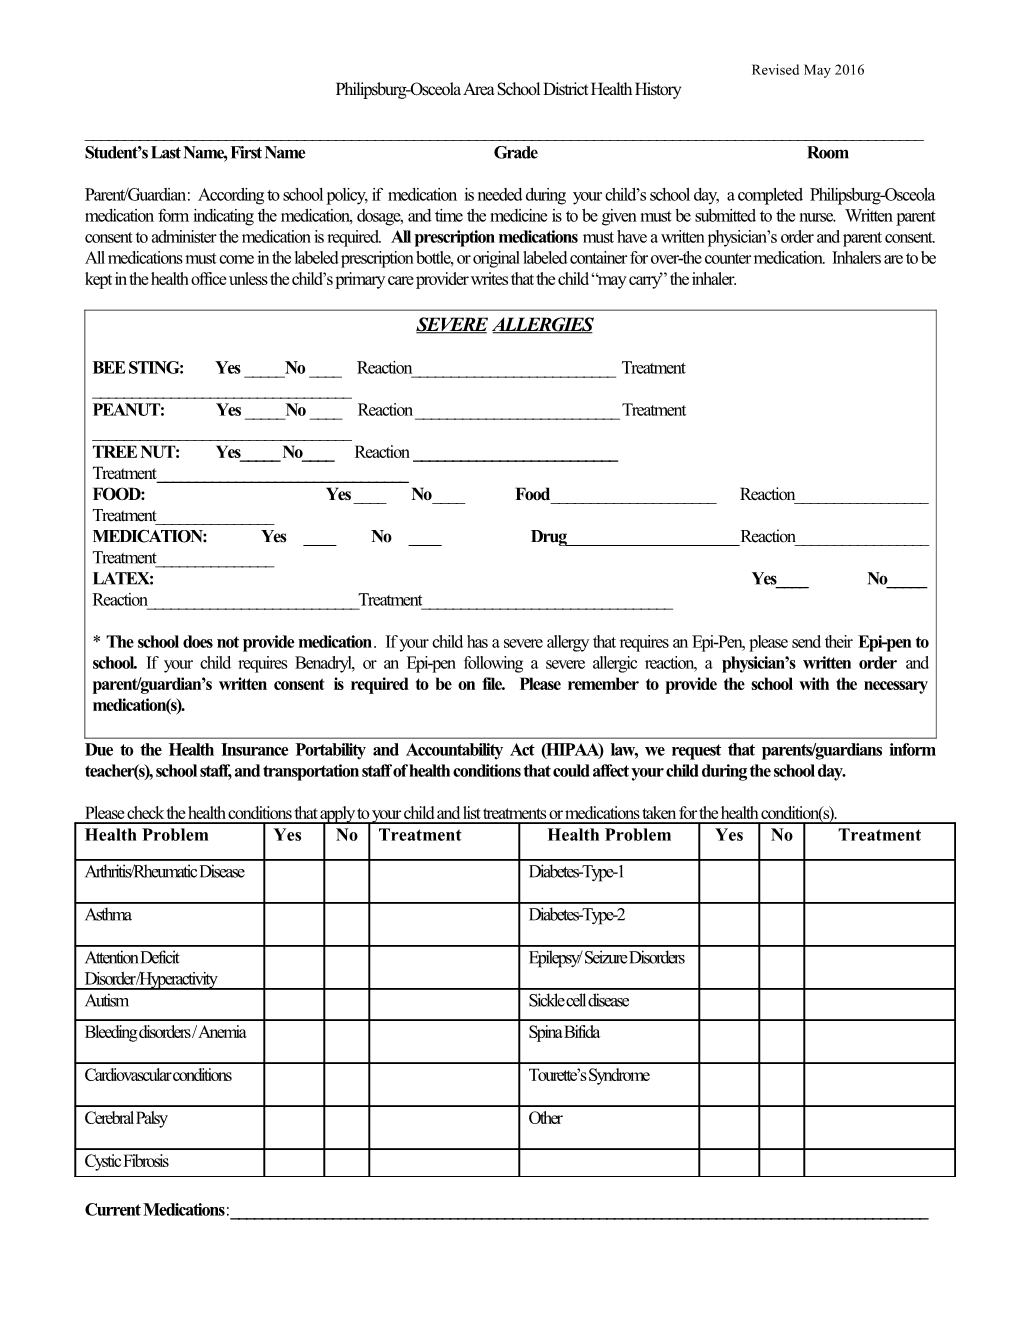 Philipsburg-Osceola Area School District Health History Form, 20____-20____ School Year